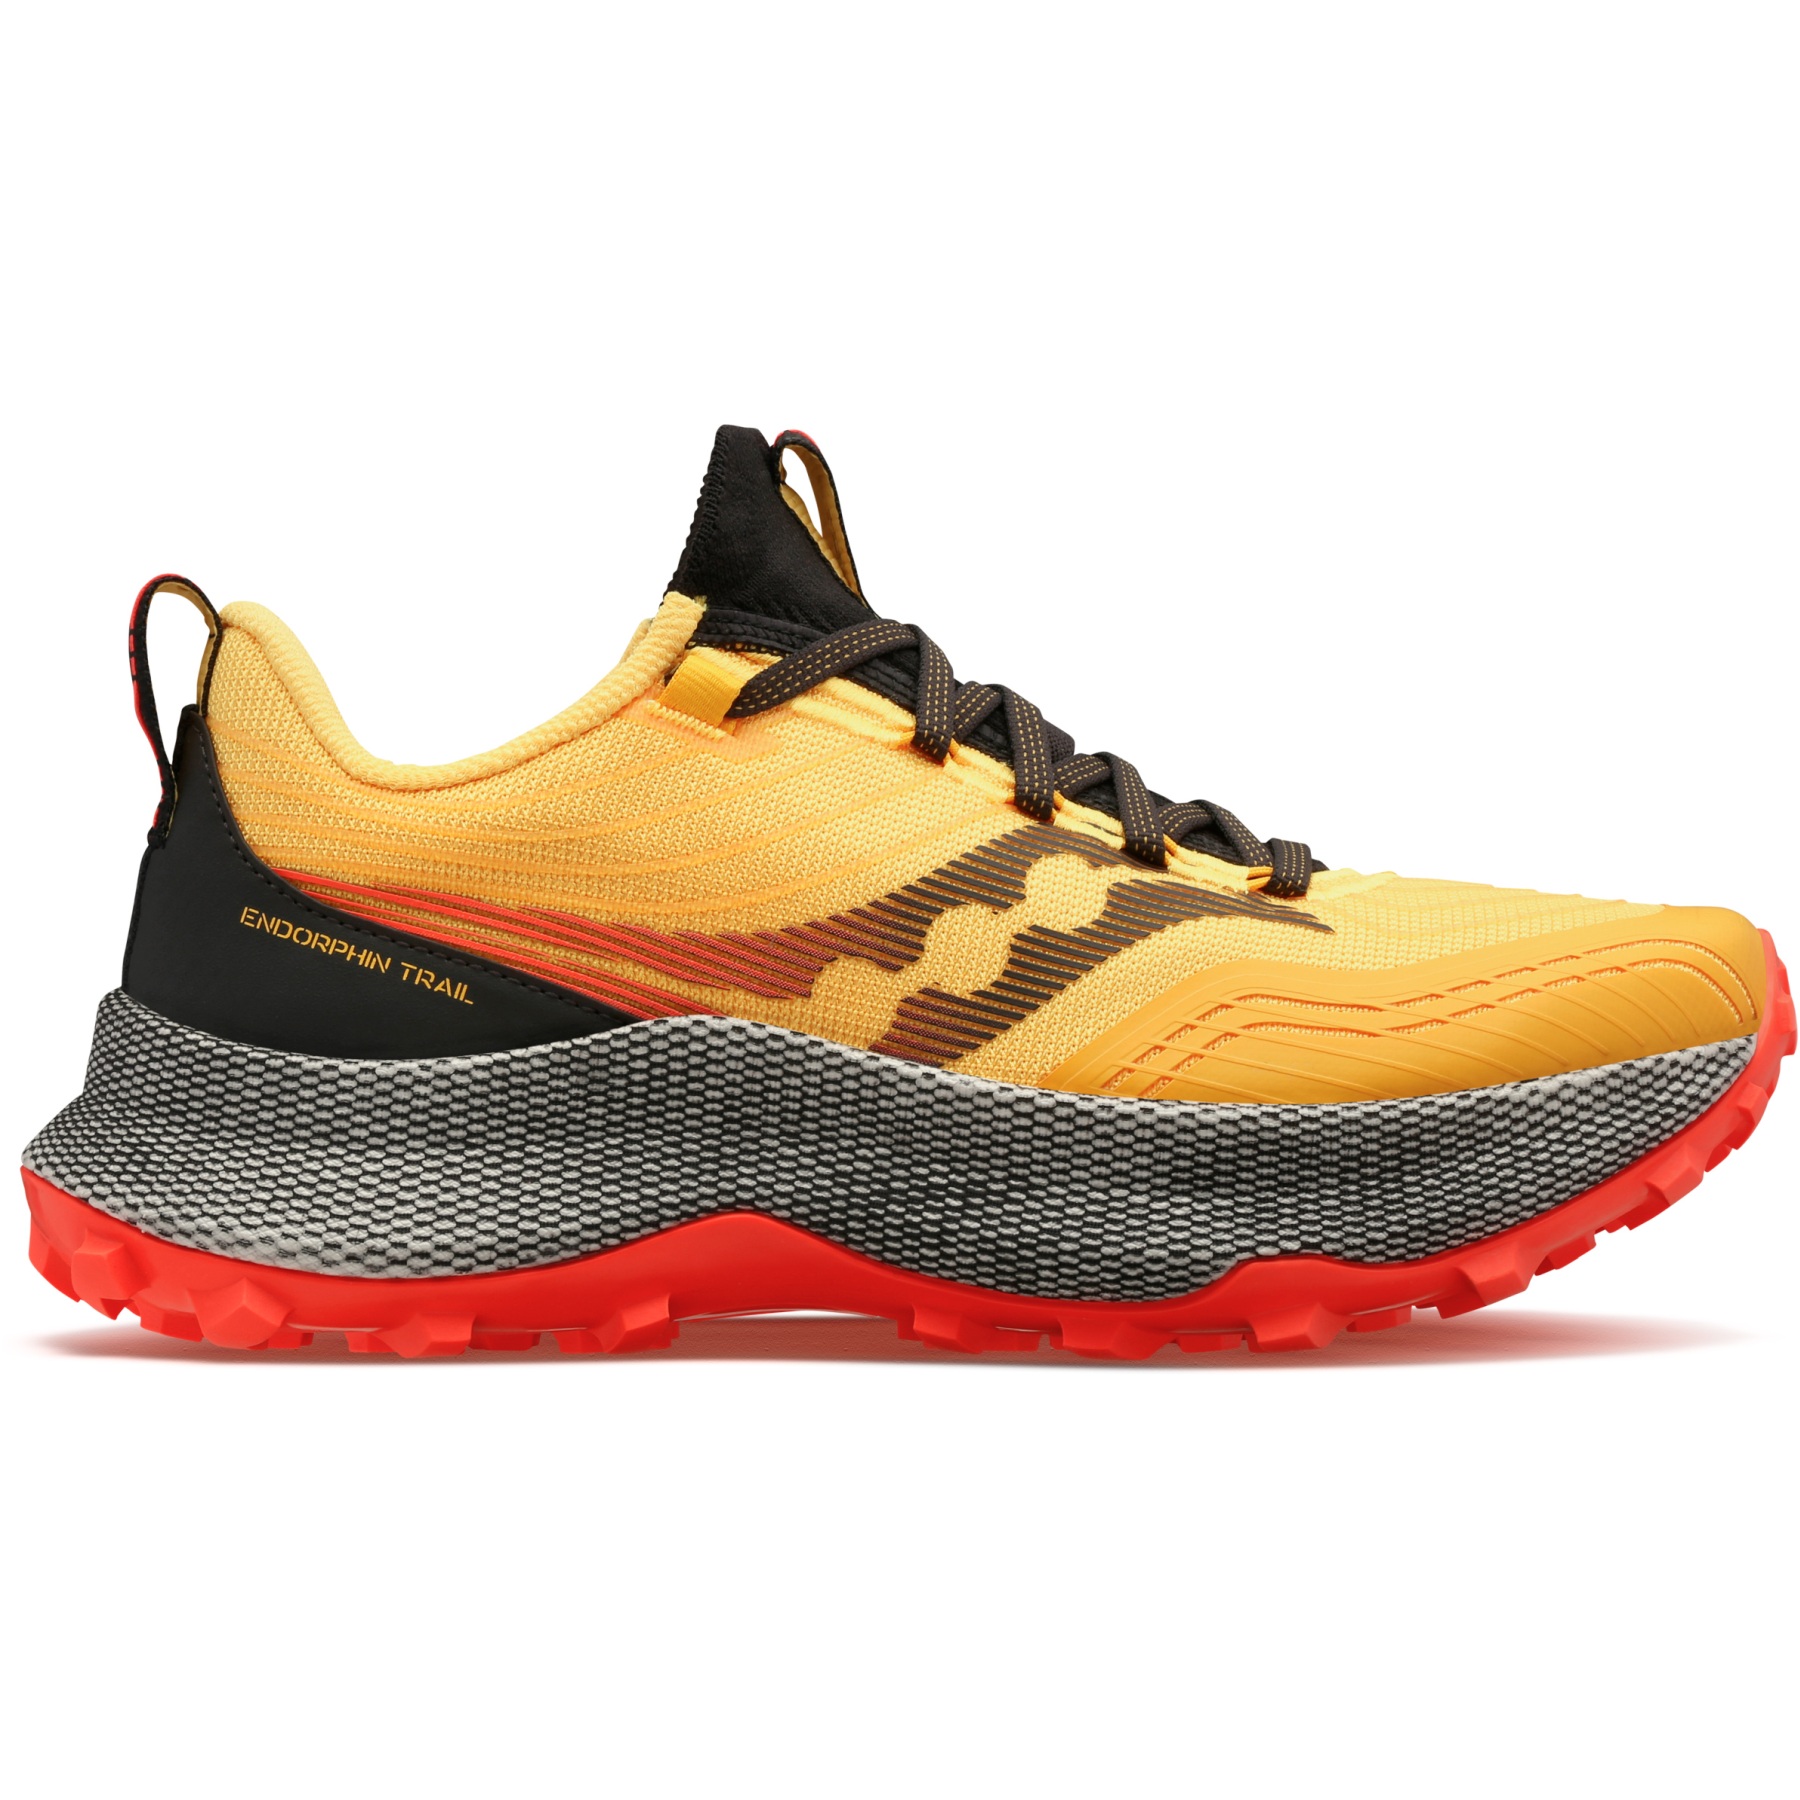 Productfoto van Saucony Endorphin Trail Trail Running Shoes - vizi gold/vizi red